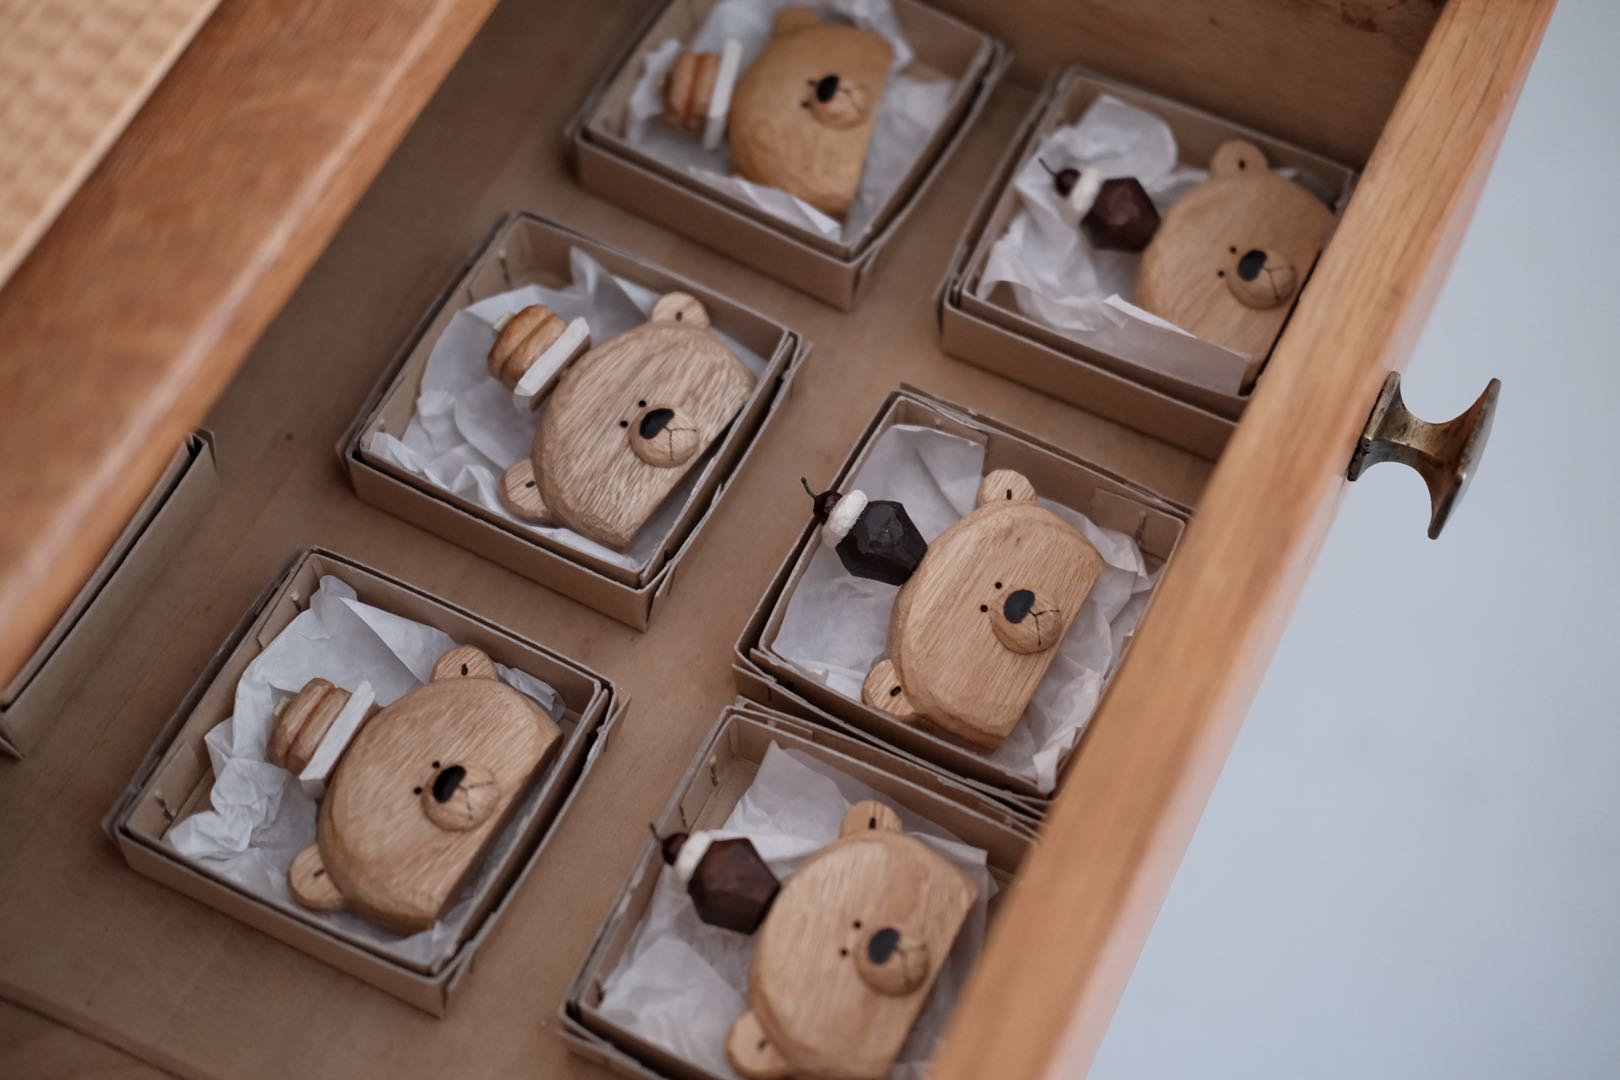 Bear brooch(cup cakes)  - By Japanese artist Kinone